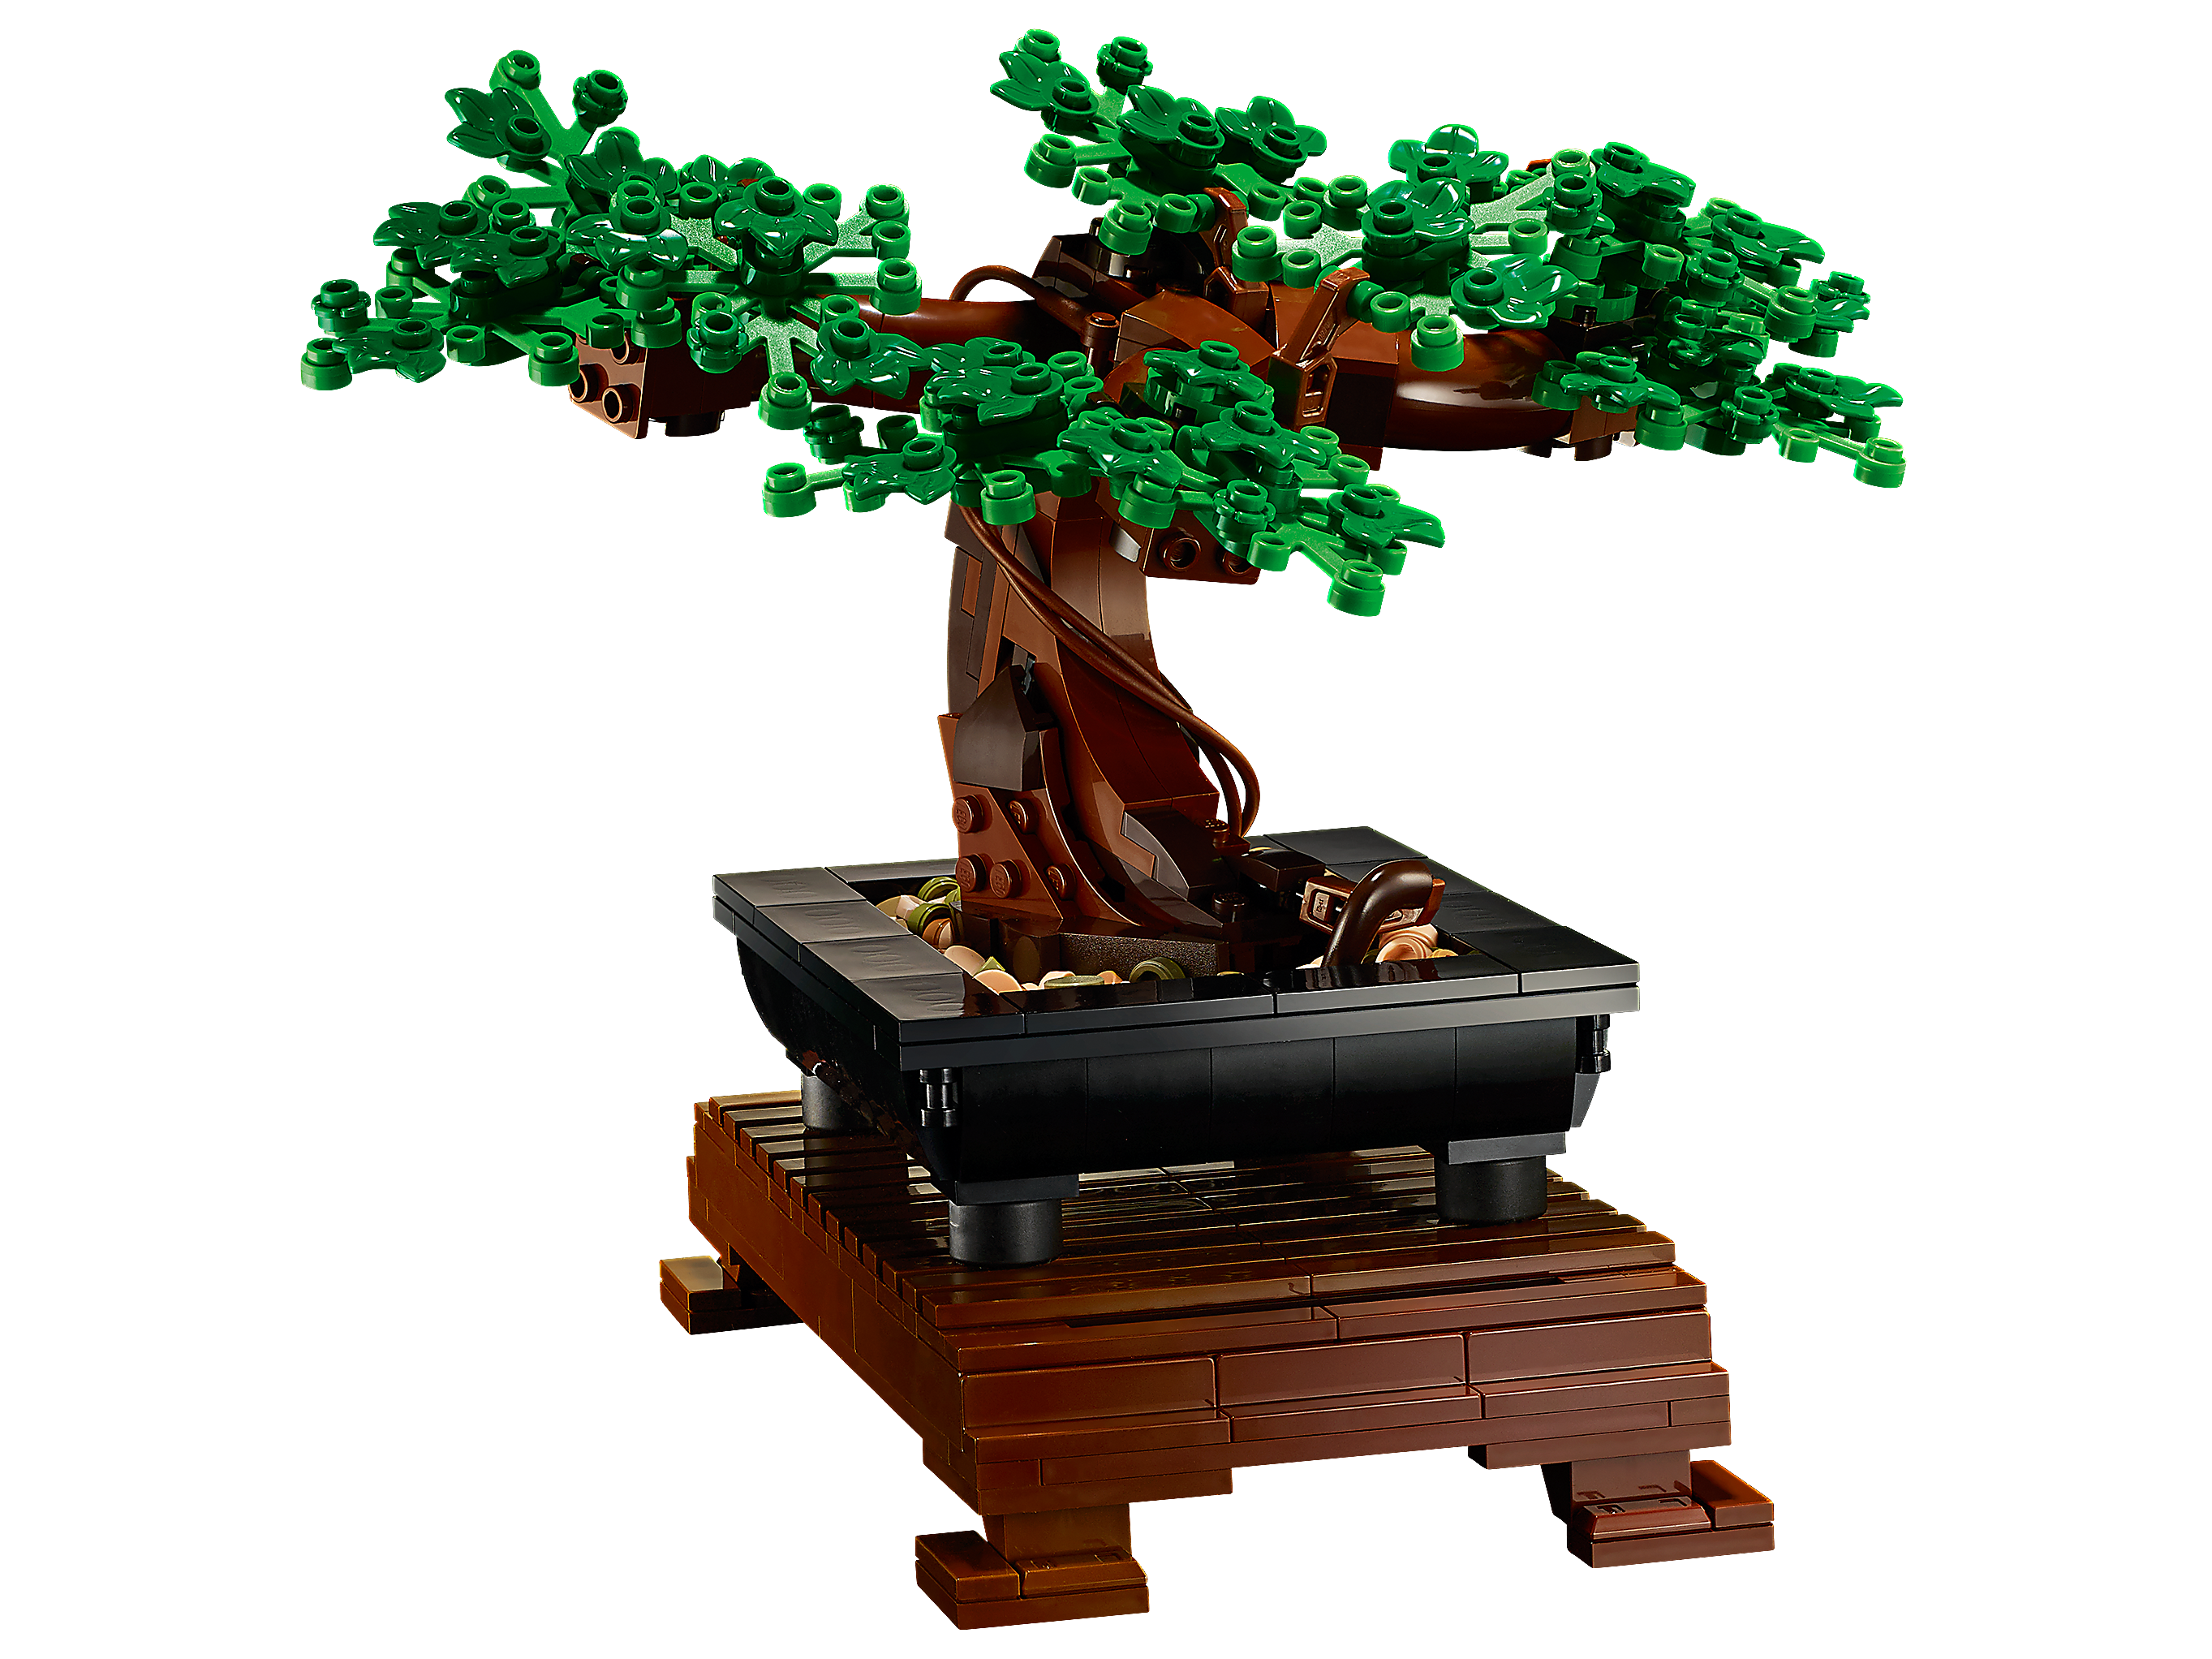 Modifying the bonsai tree  Lego tree, Cool lego creations, Lego